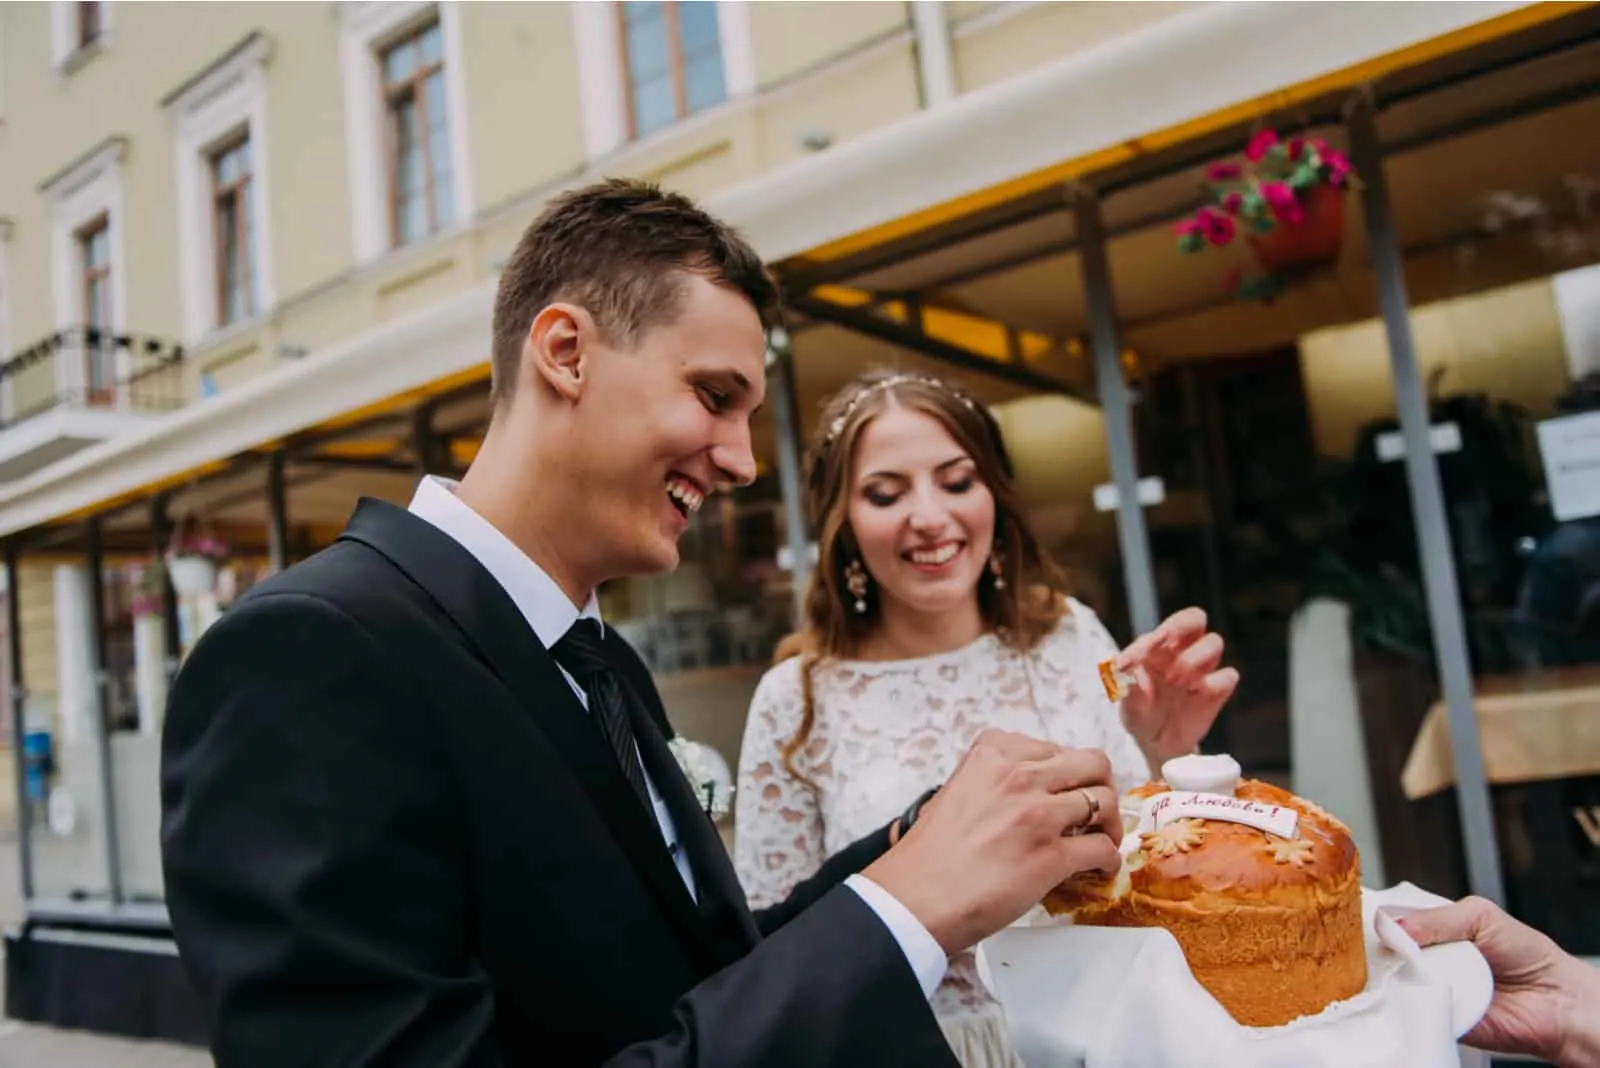 Russian wedding bread with salt